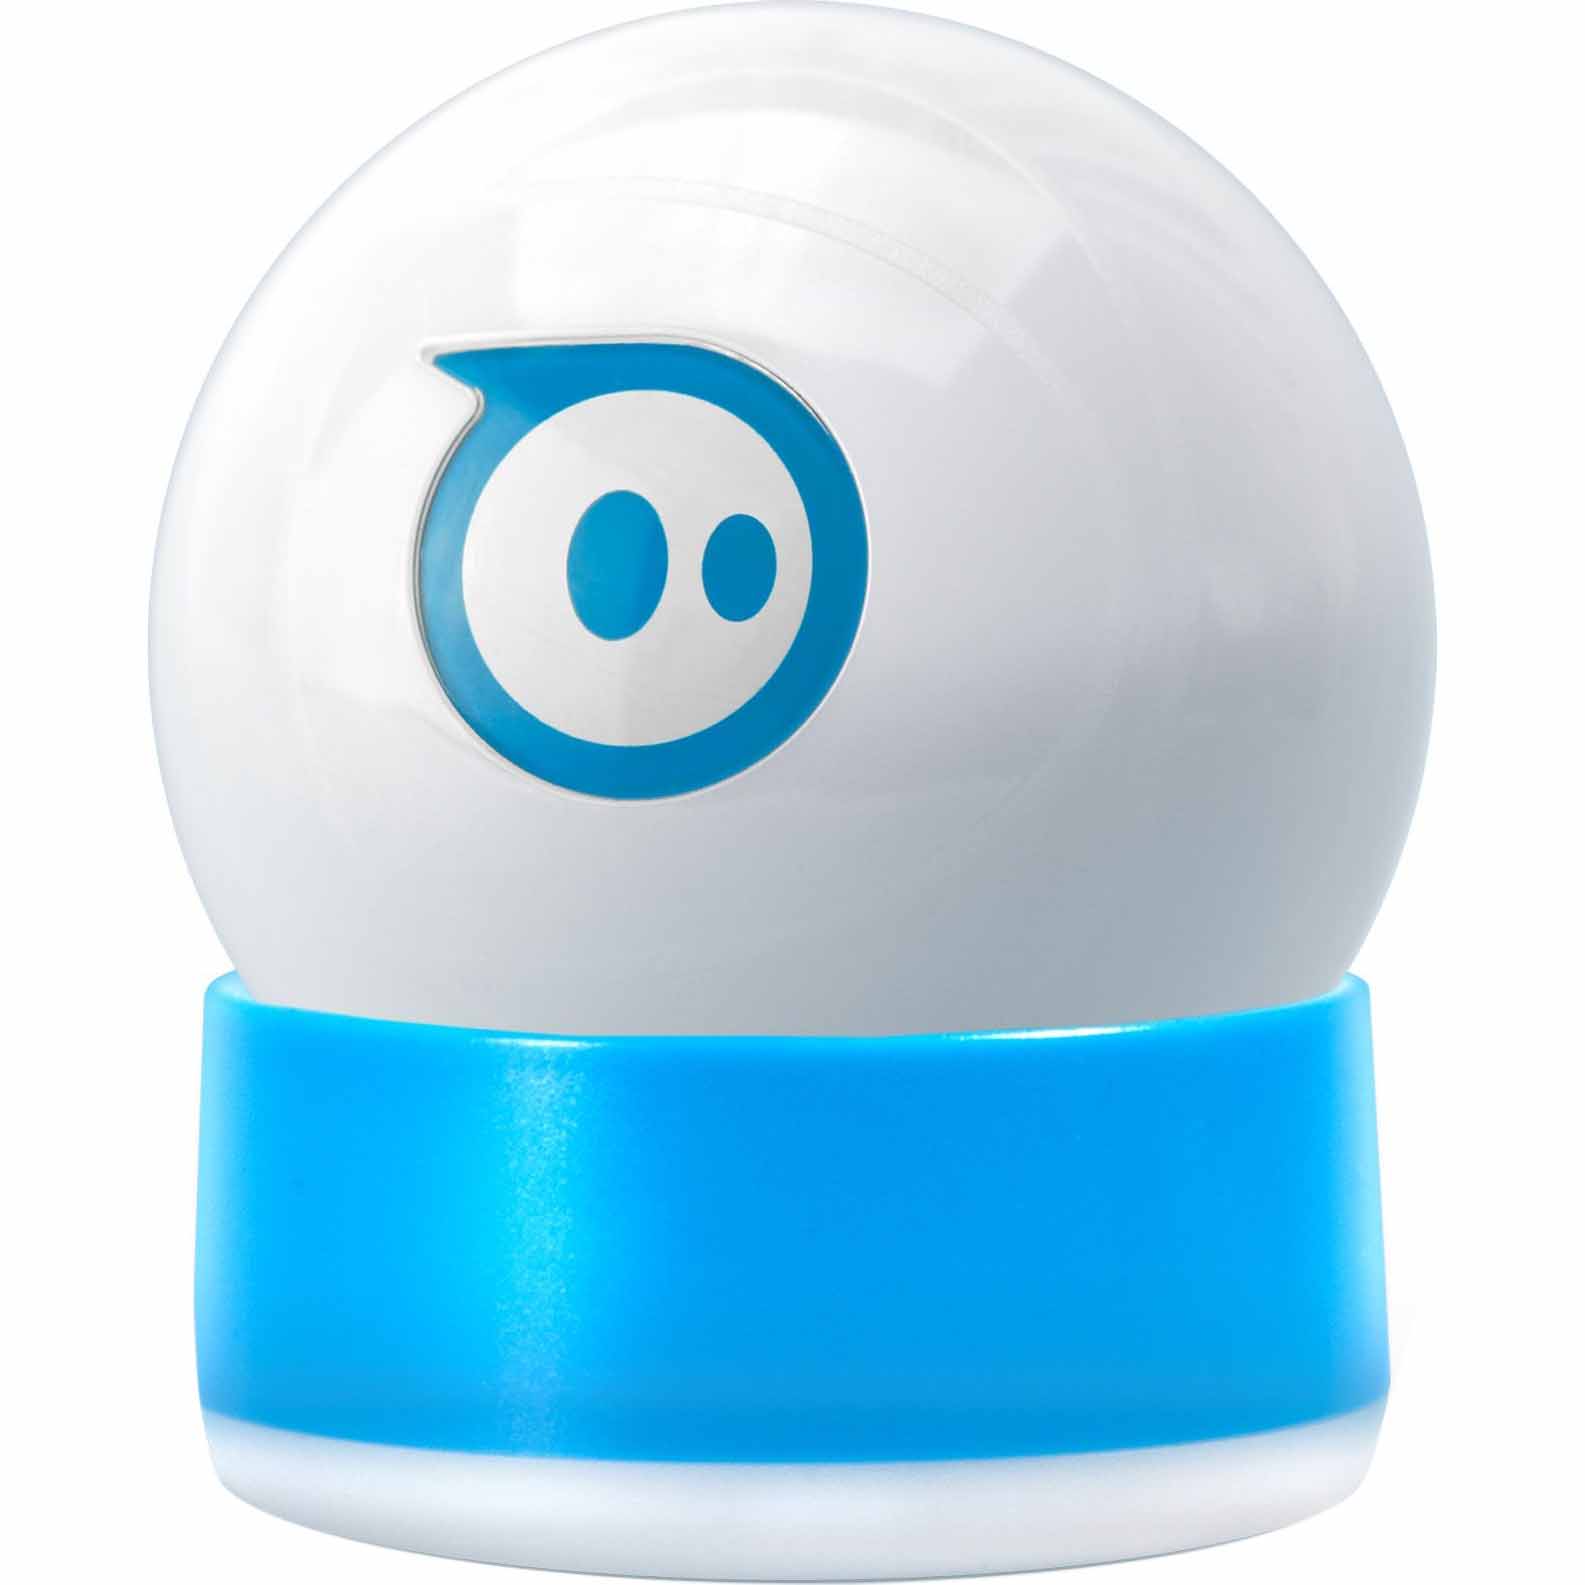 Orbotix Sphero 2.0 Robotics Ball